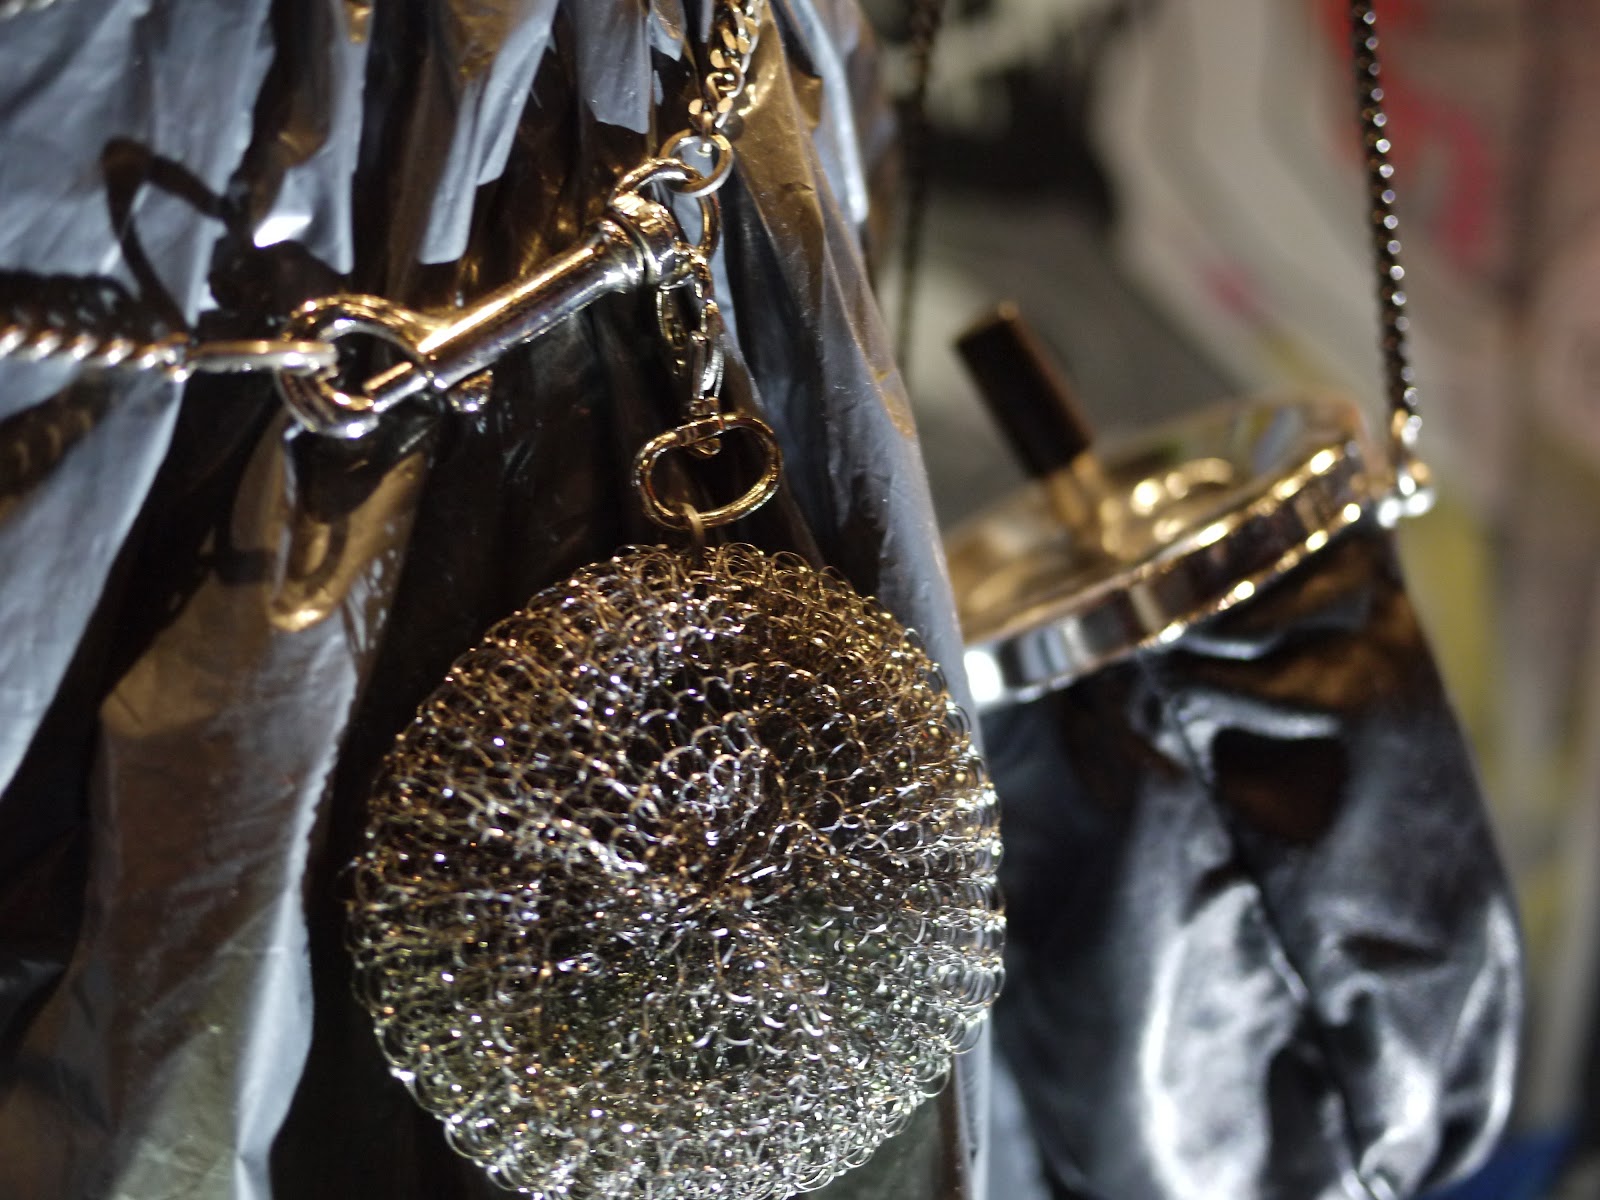 Scourer jewellery and ashtray handbag